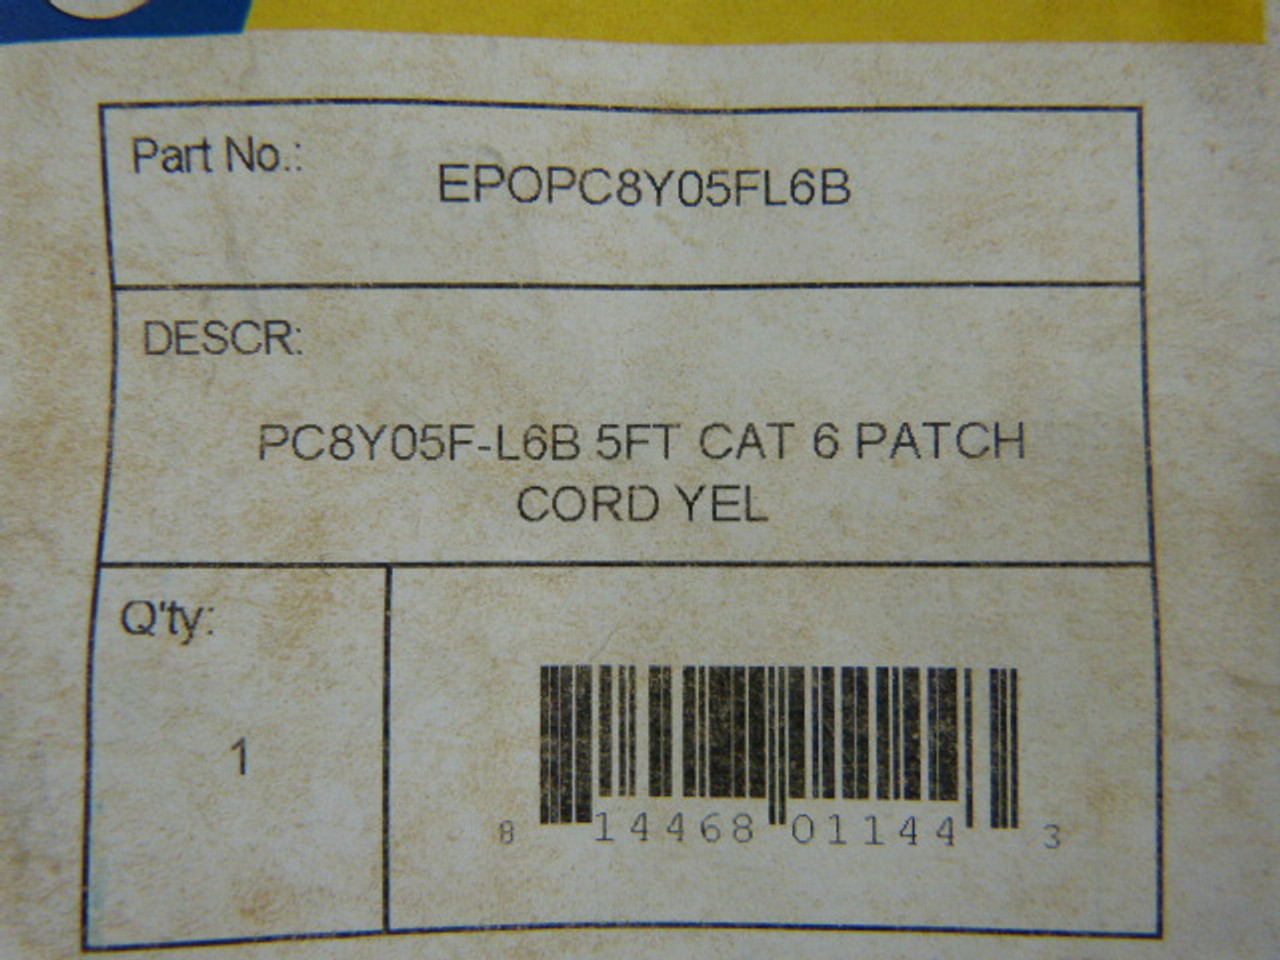 ElectriPro EPOPC8Y05FL6B Cat 6 Patch Cord Yellow 5ft SHELF WEAR NWB